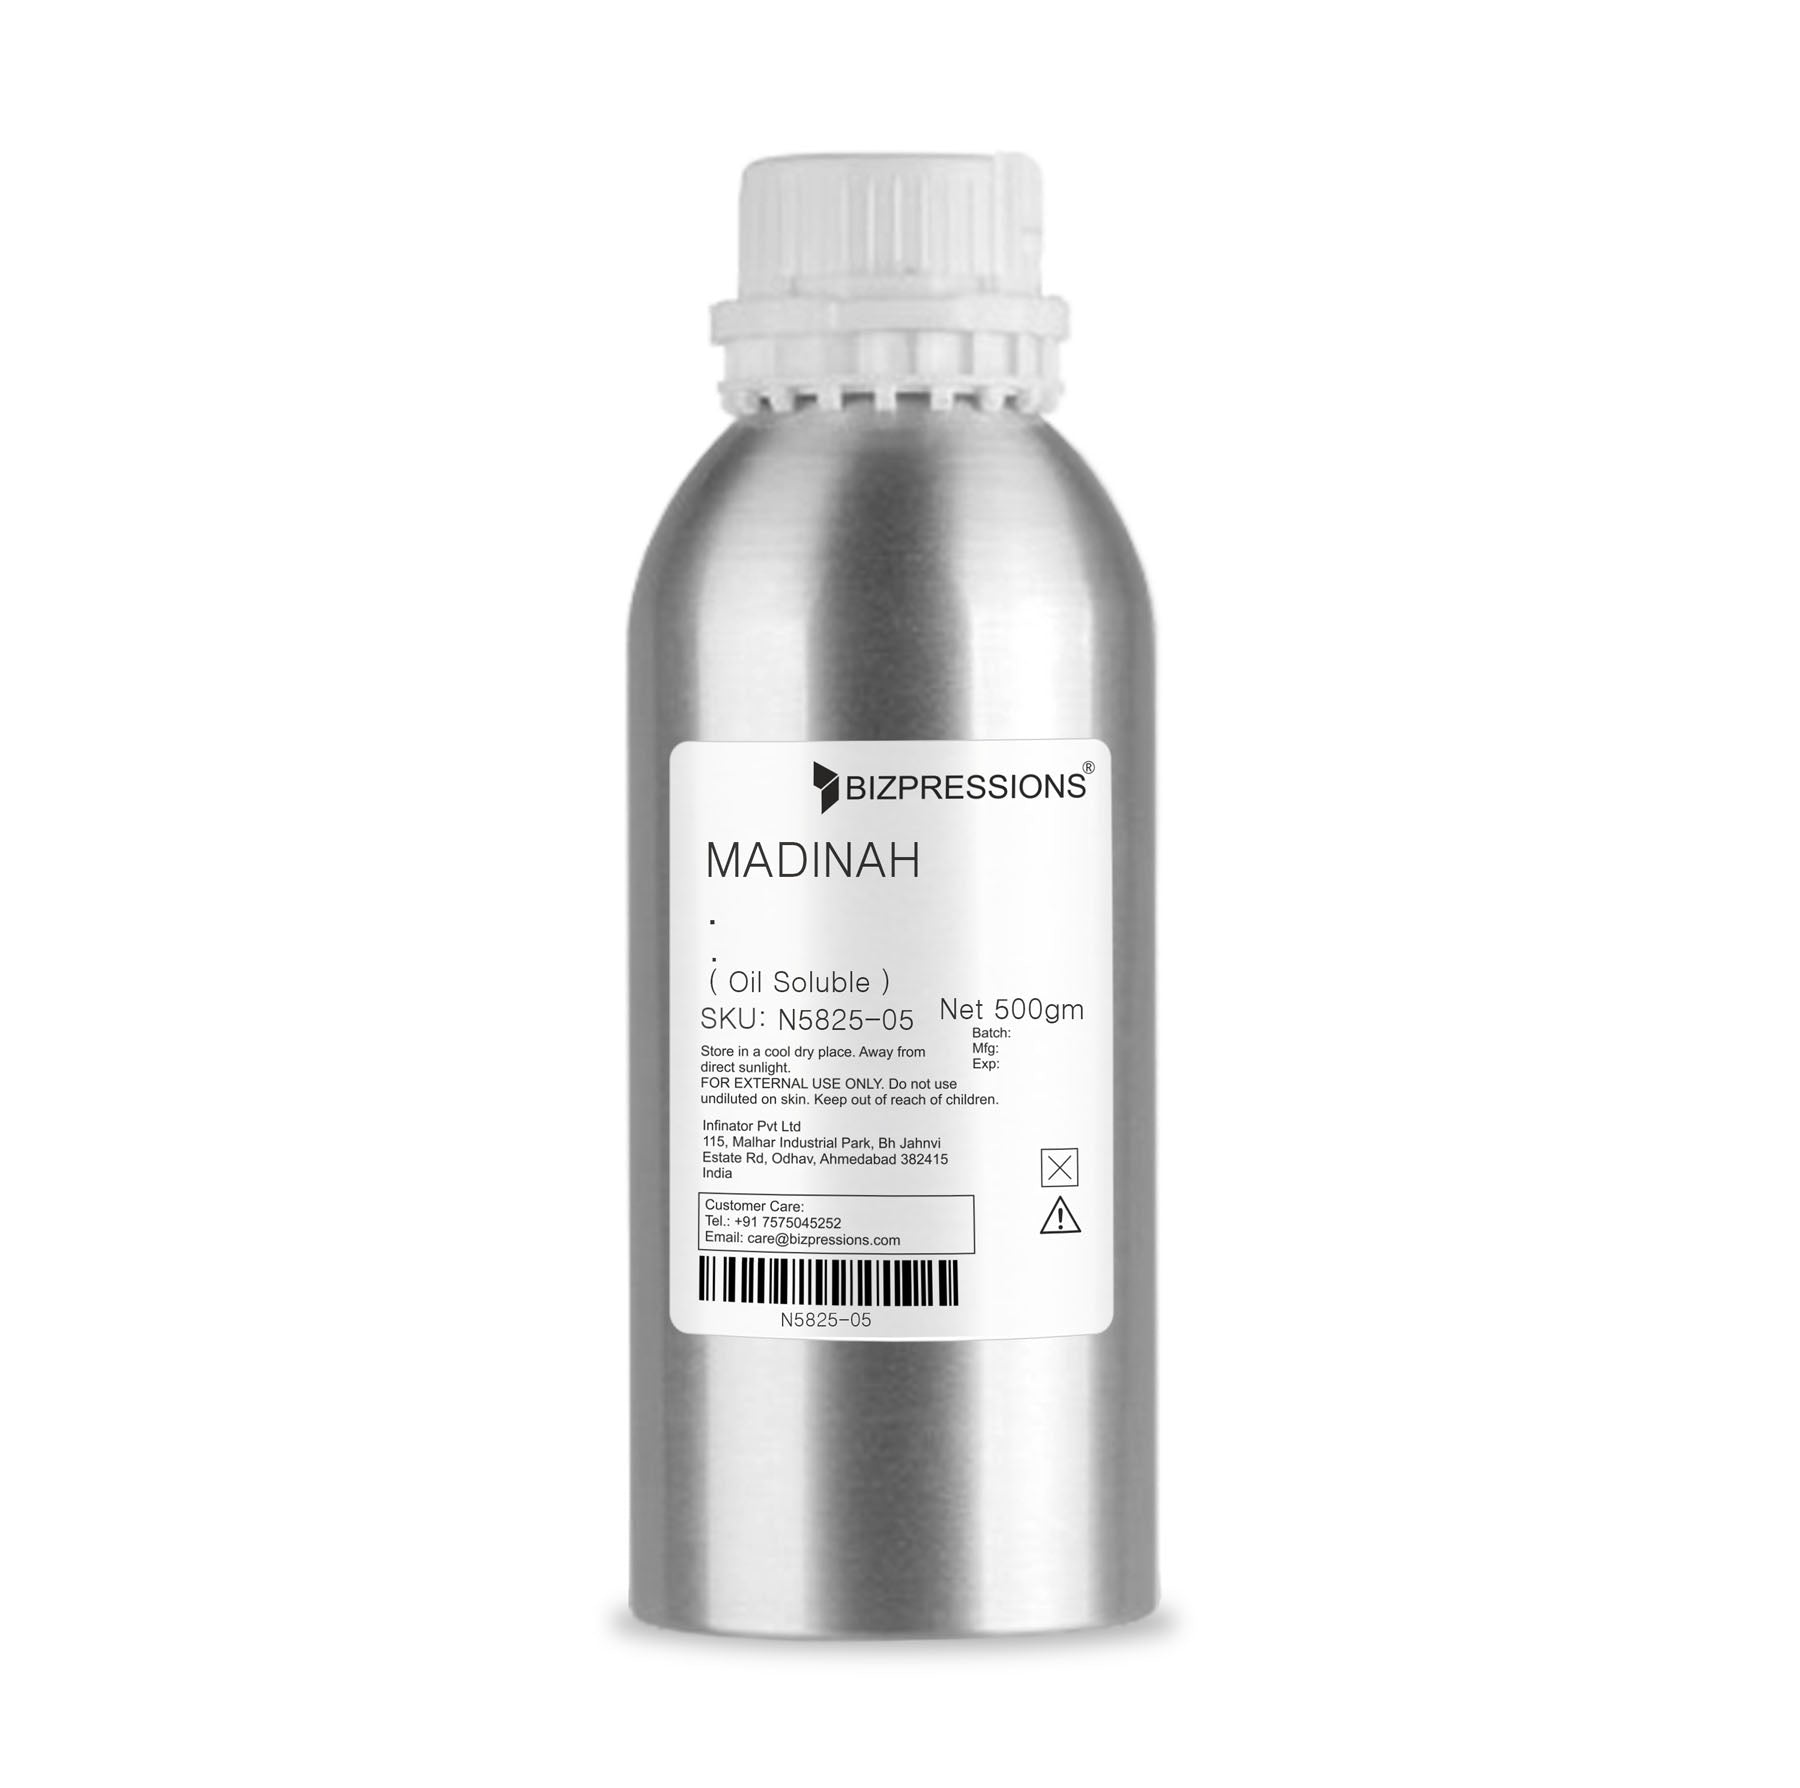 MADINAH - Fragrance ( Oil Soluble ) - 500 gm